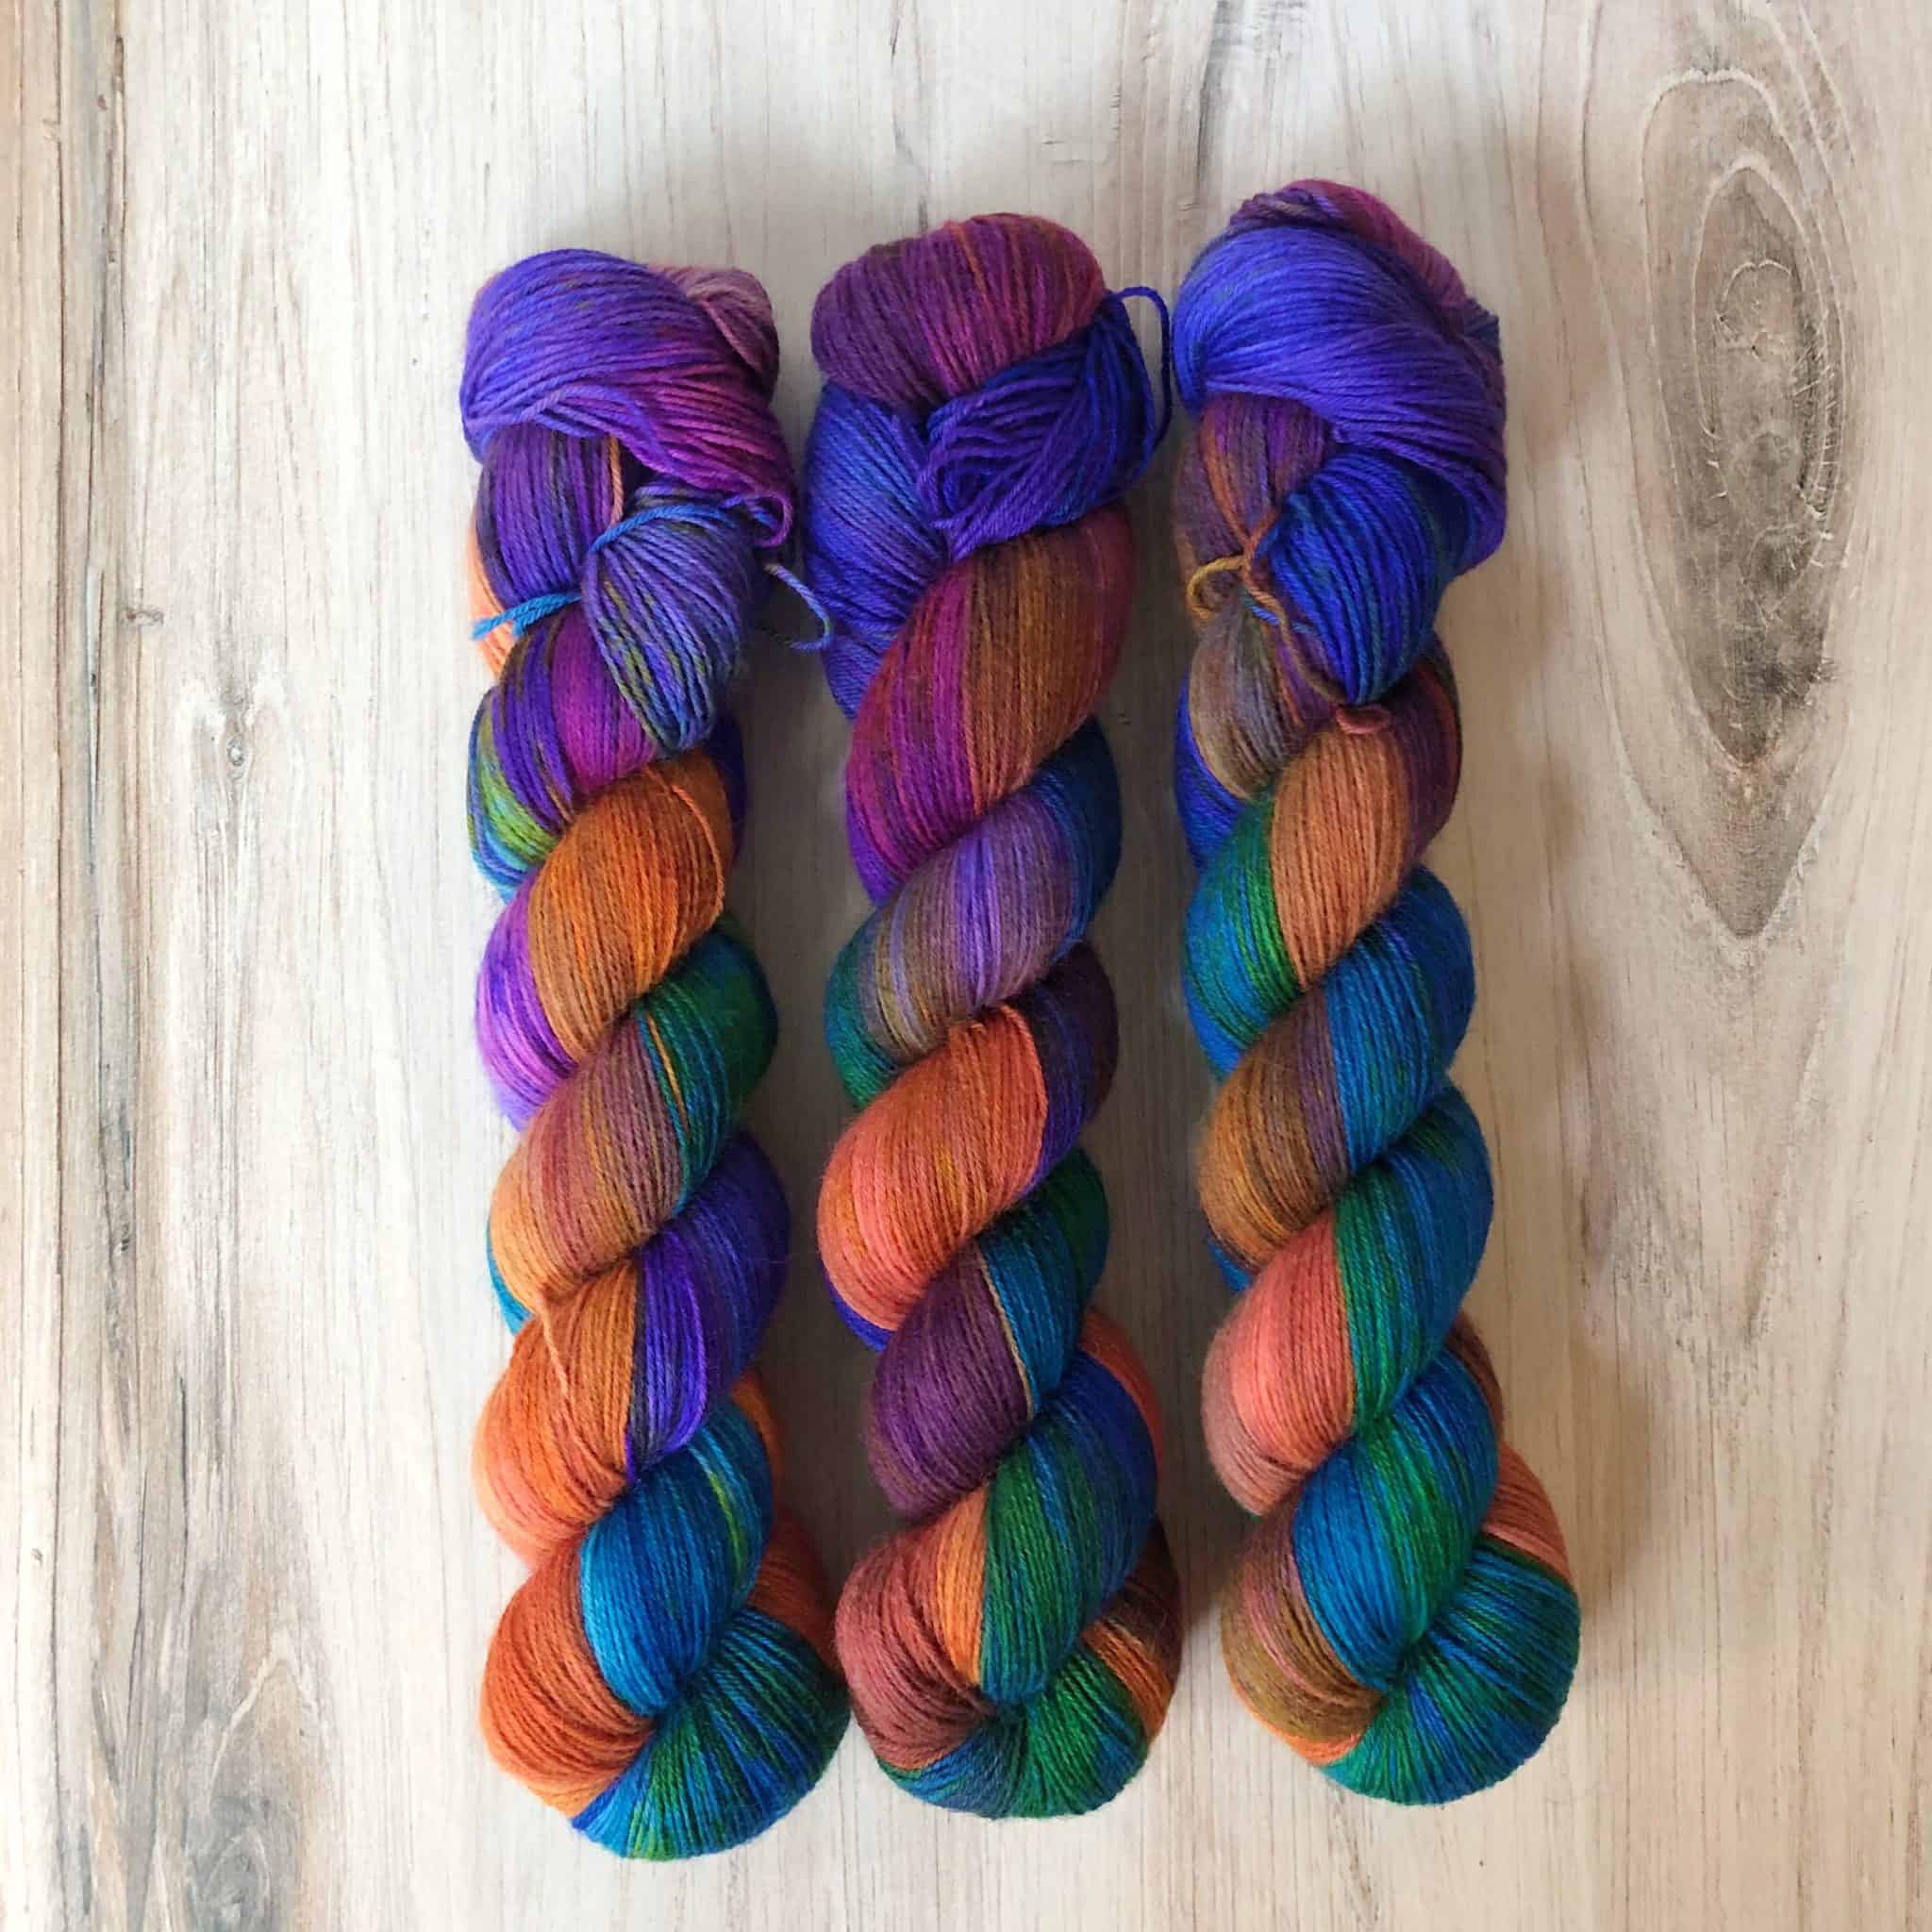 Green, orange, purple and blue variegated yarn.